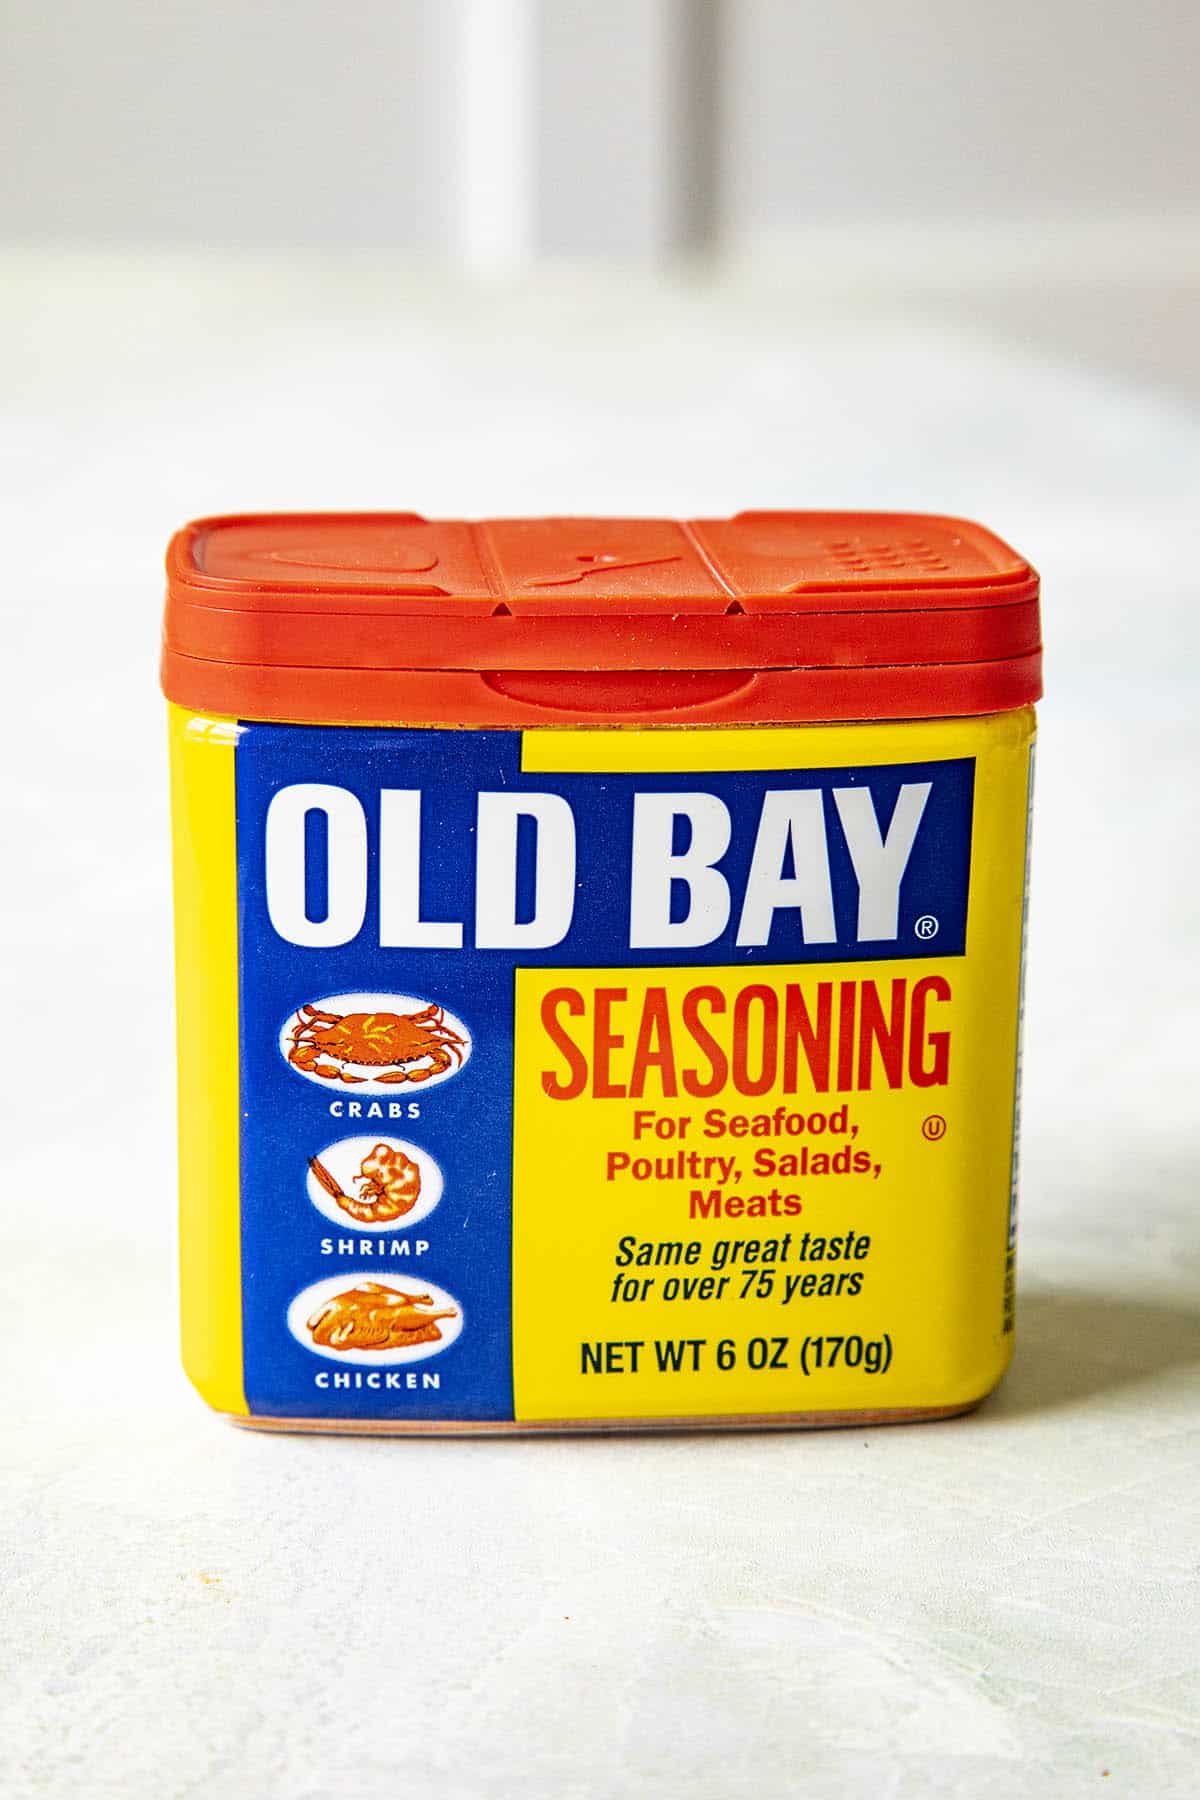 Old Bay Seasoning